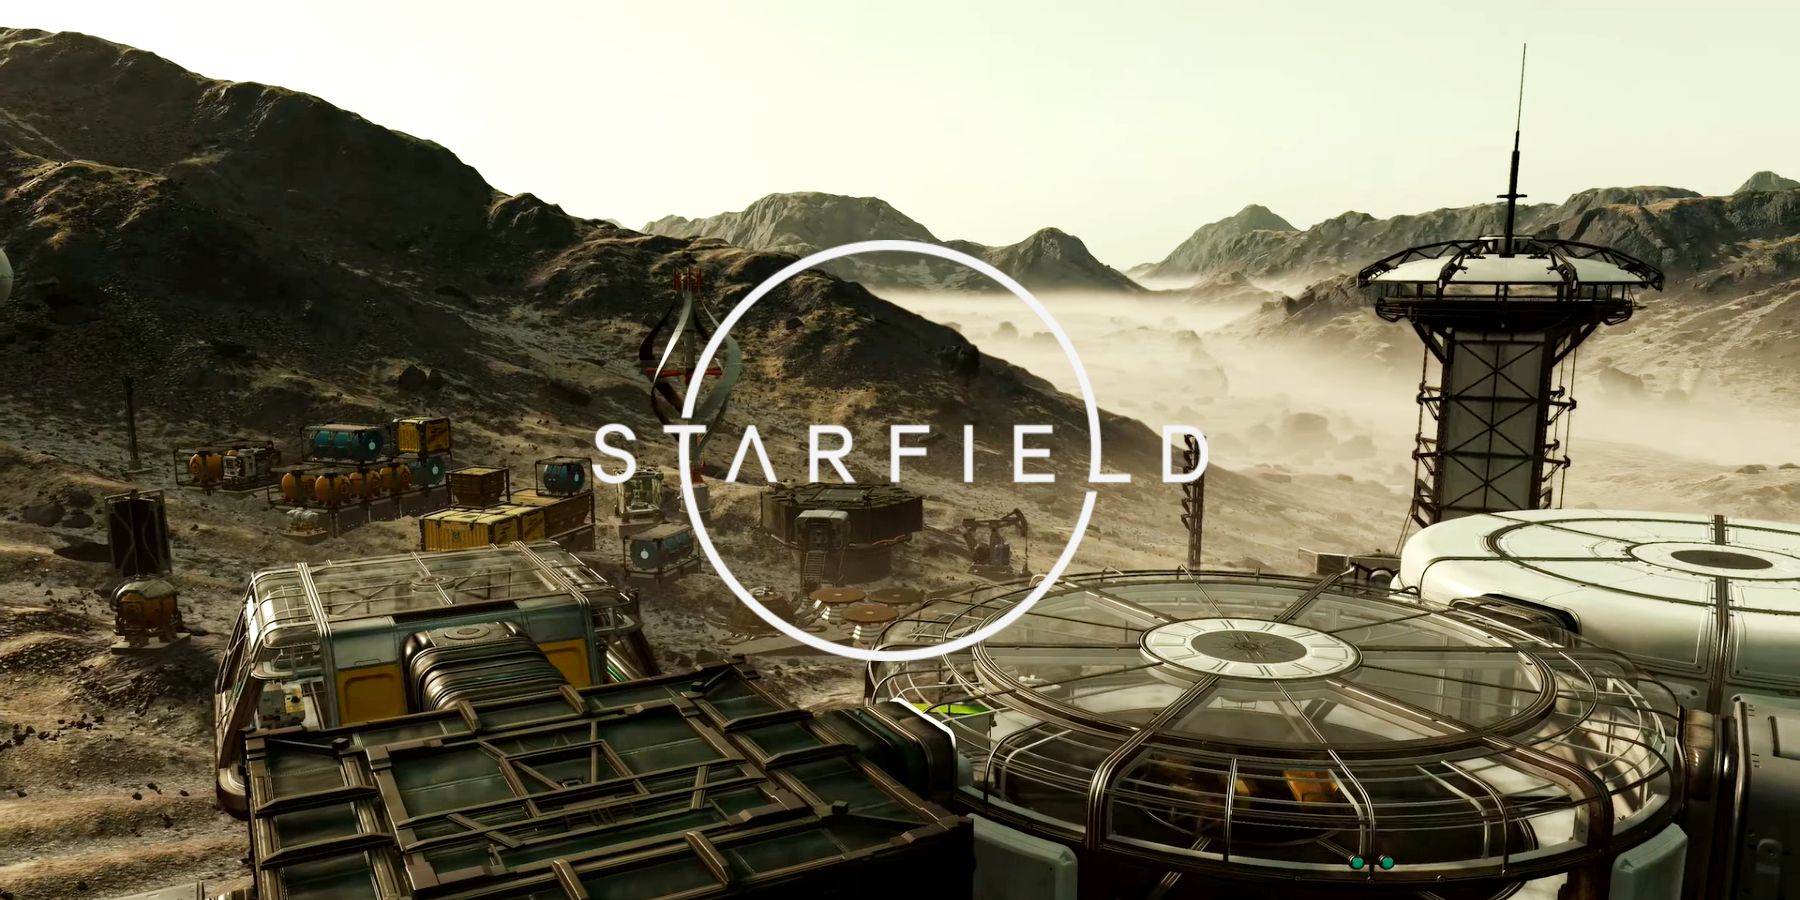 Starfield gameplay reveal outpost settlement shot